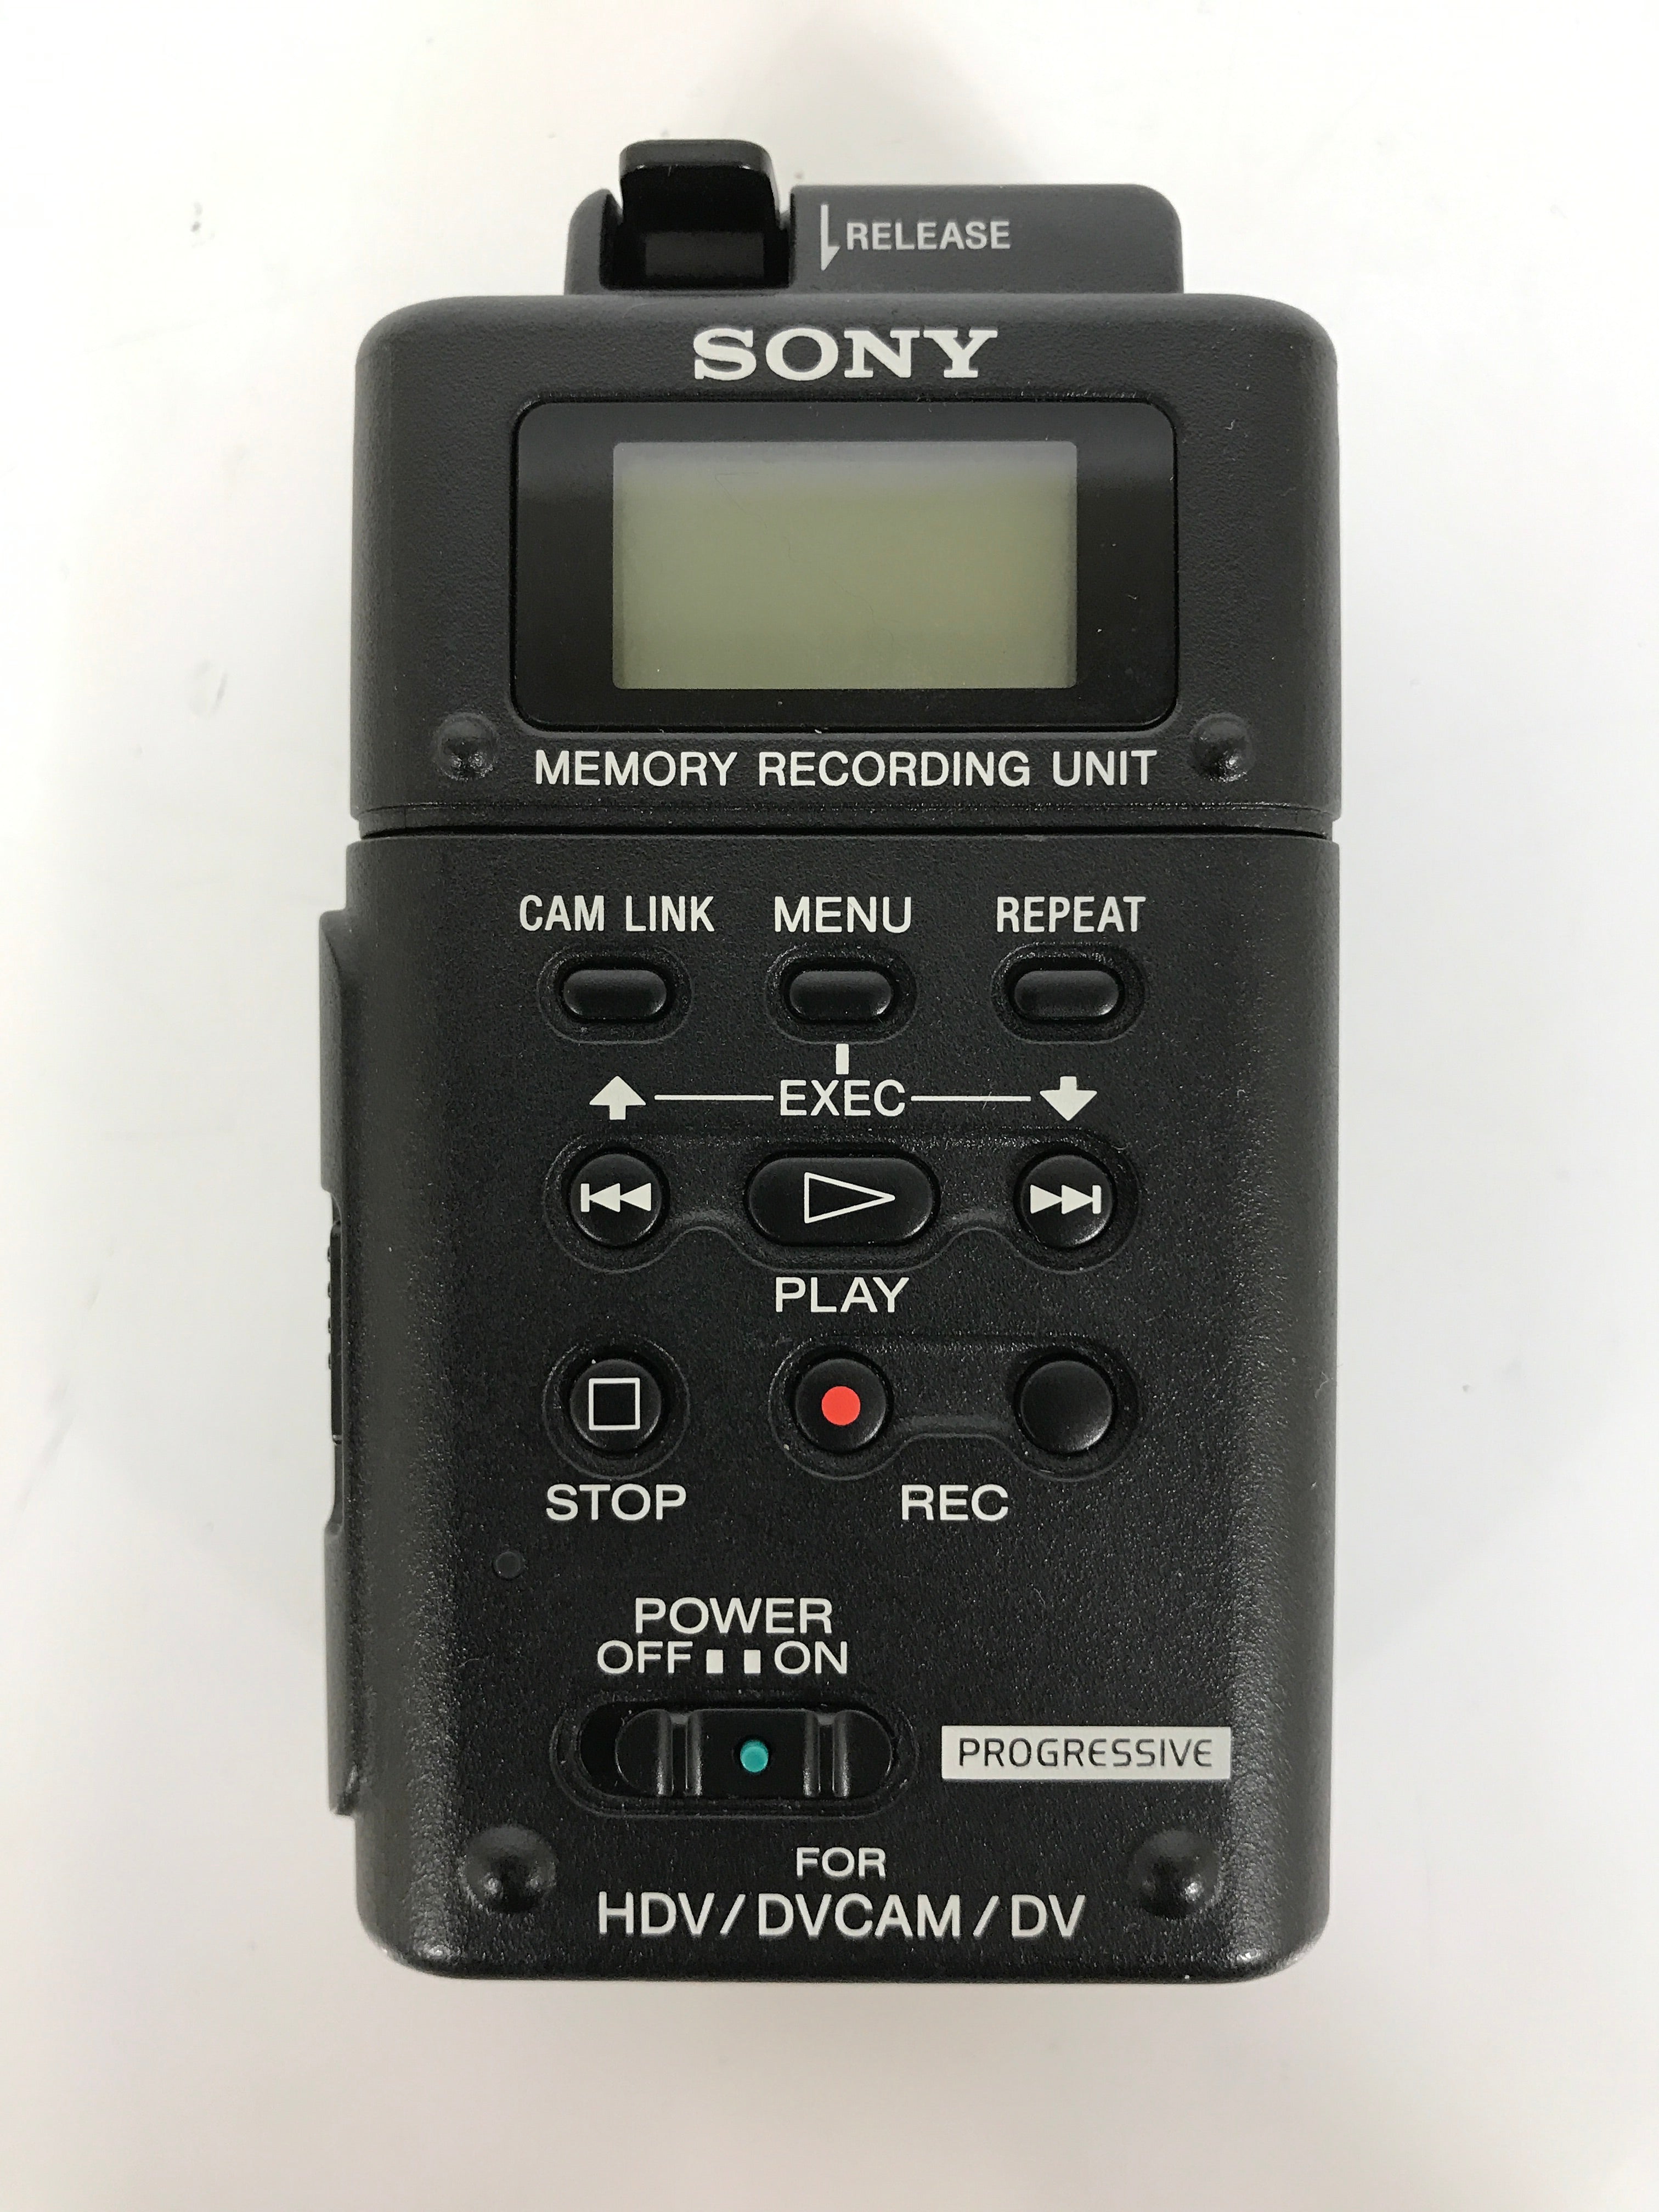 Sony HVR-MRC1 Memory Recording Unit